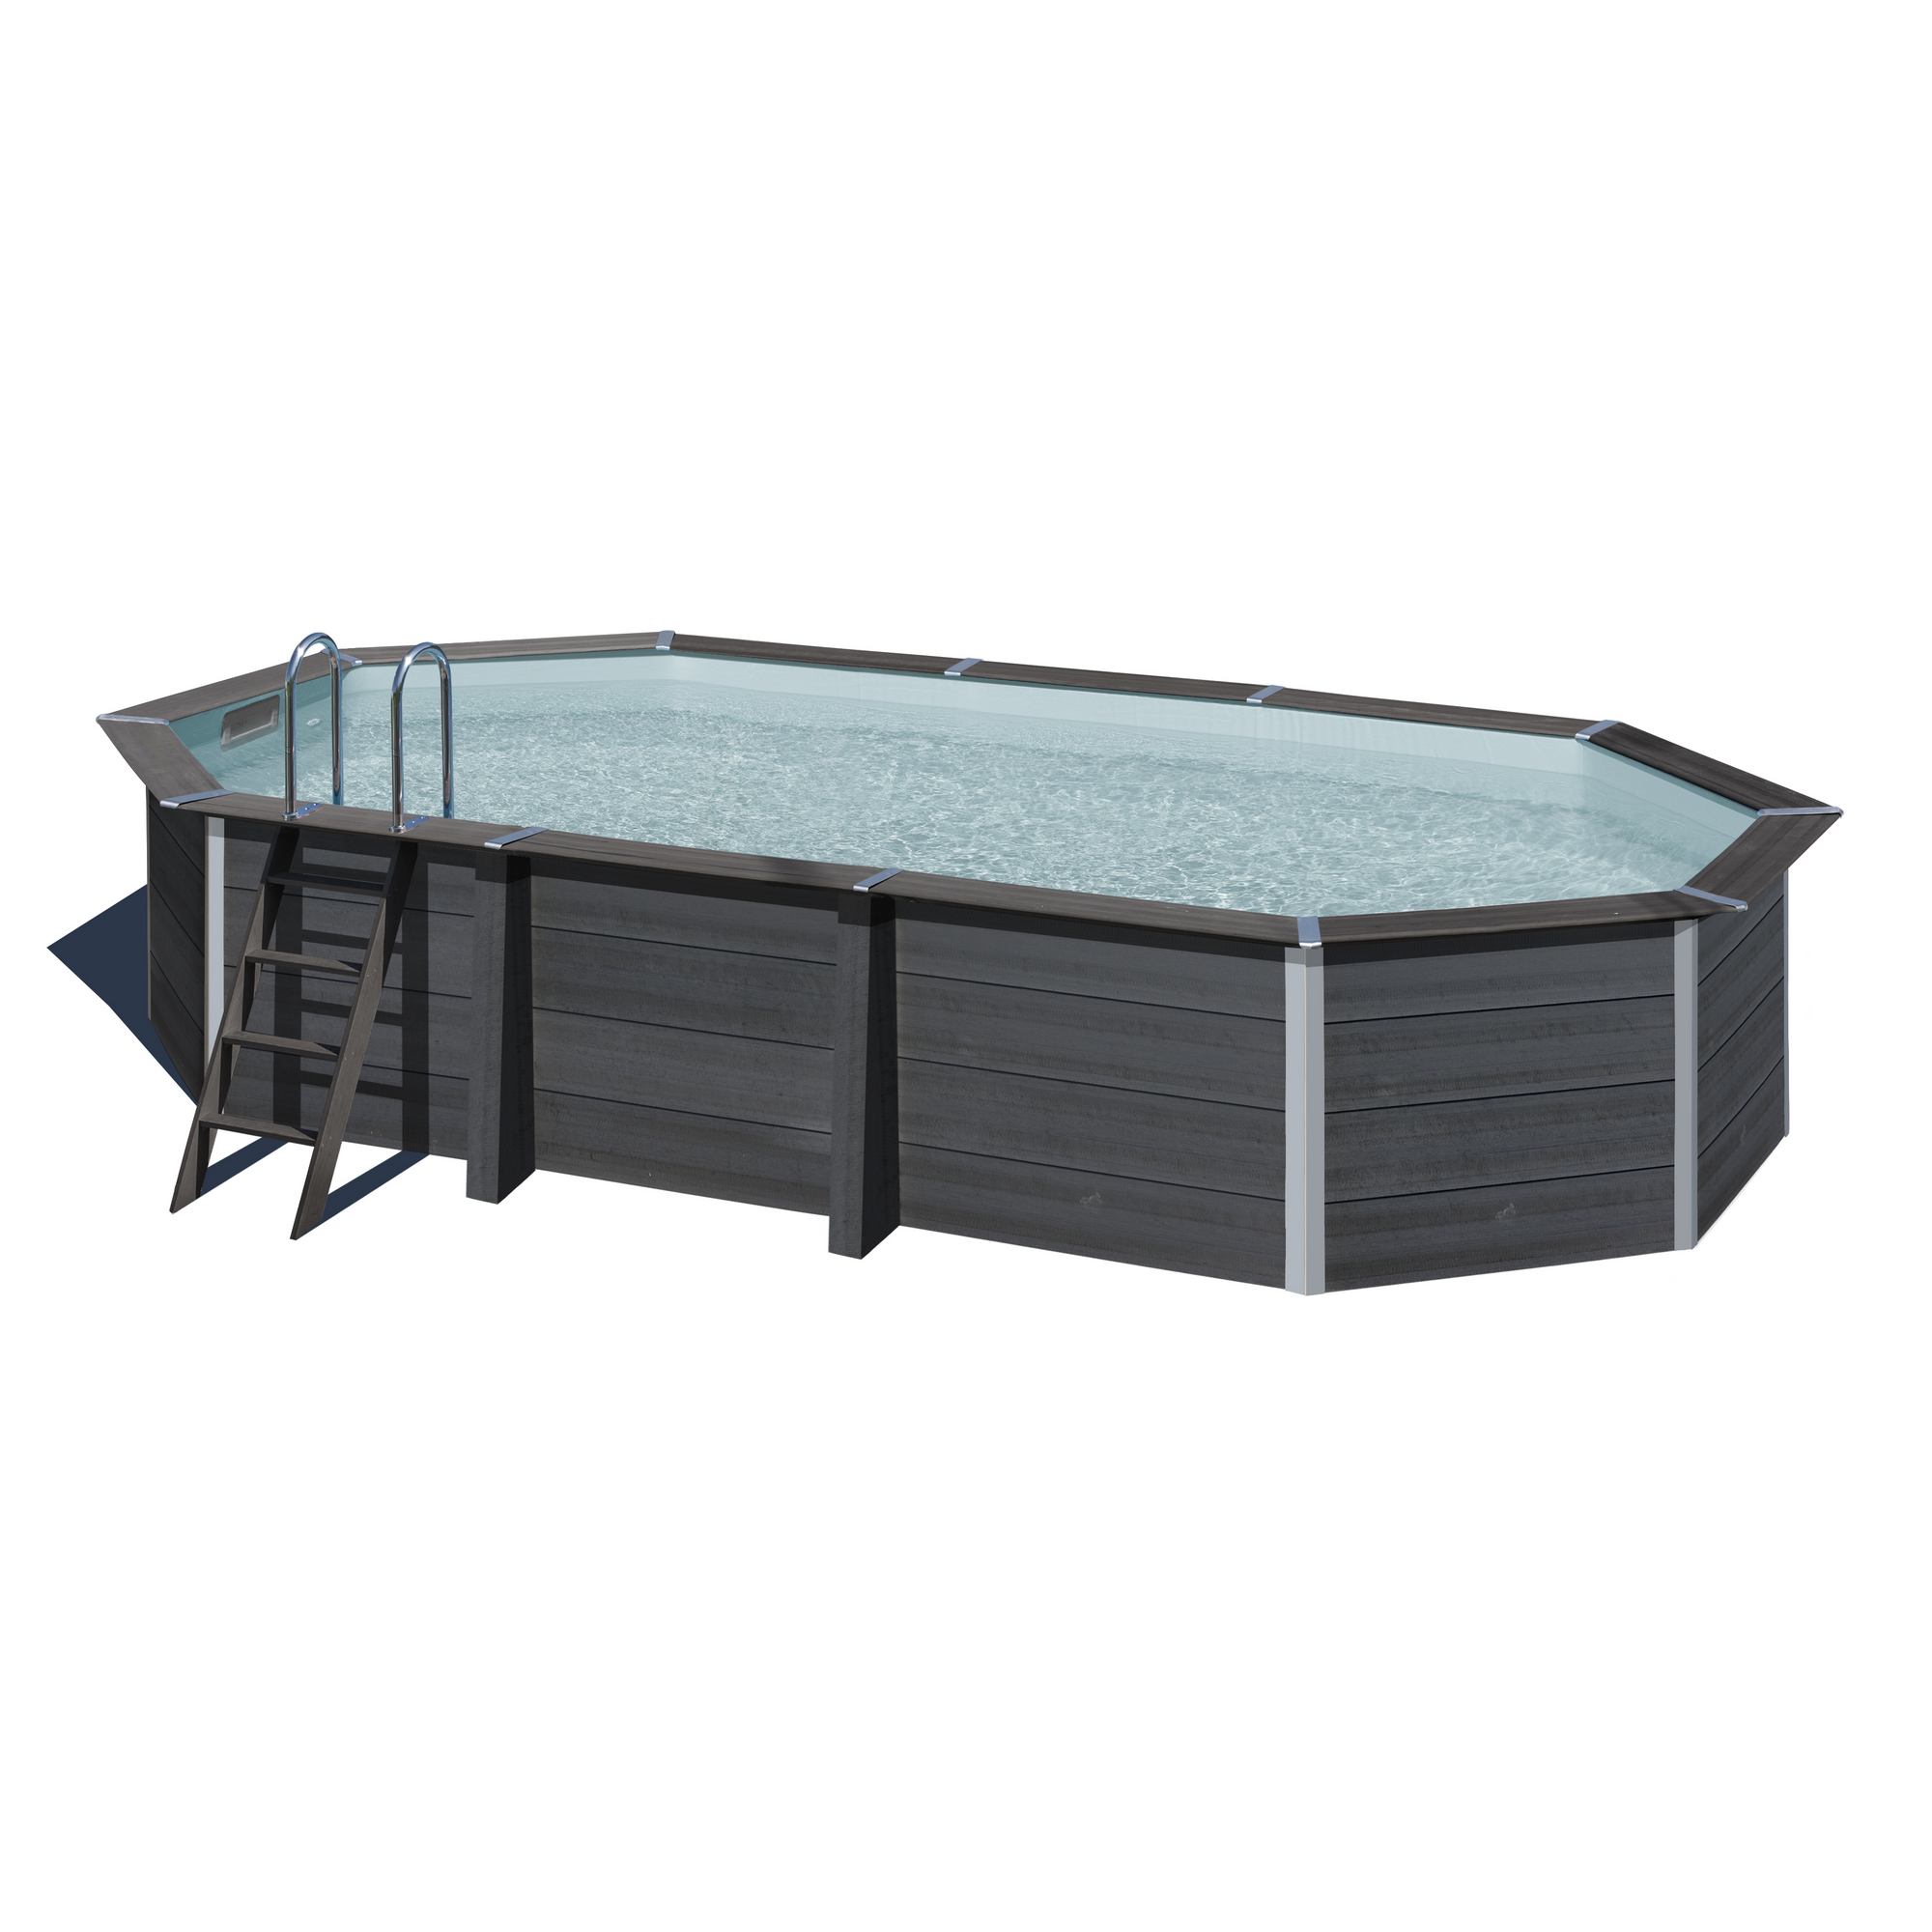 Composite Pool-Set 'Avantgarde' 664 x 386 x 124 cm mit 2 Leiter und Sandfilteranlage + product picture